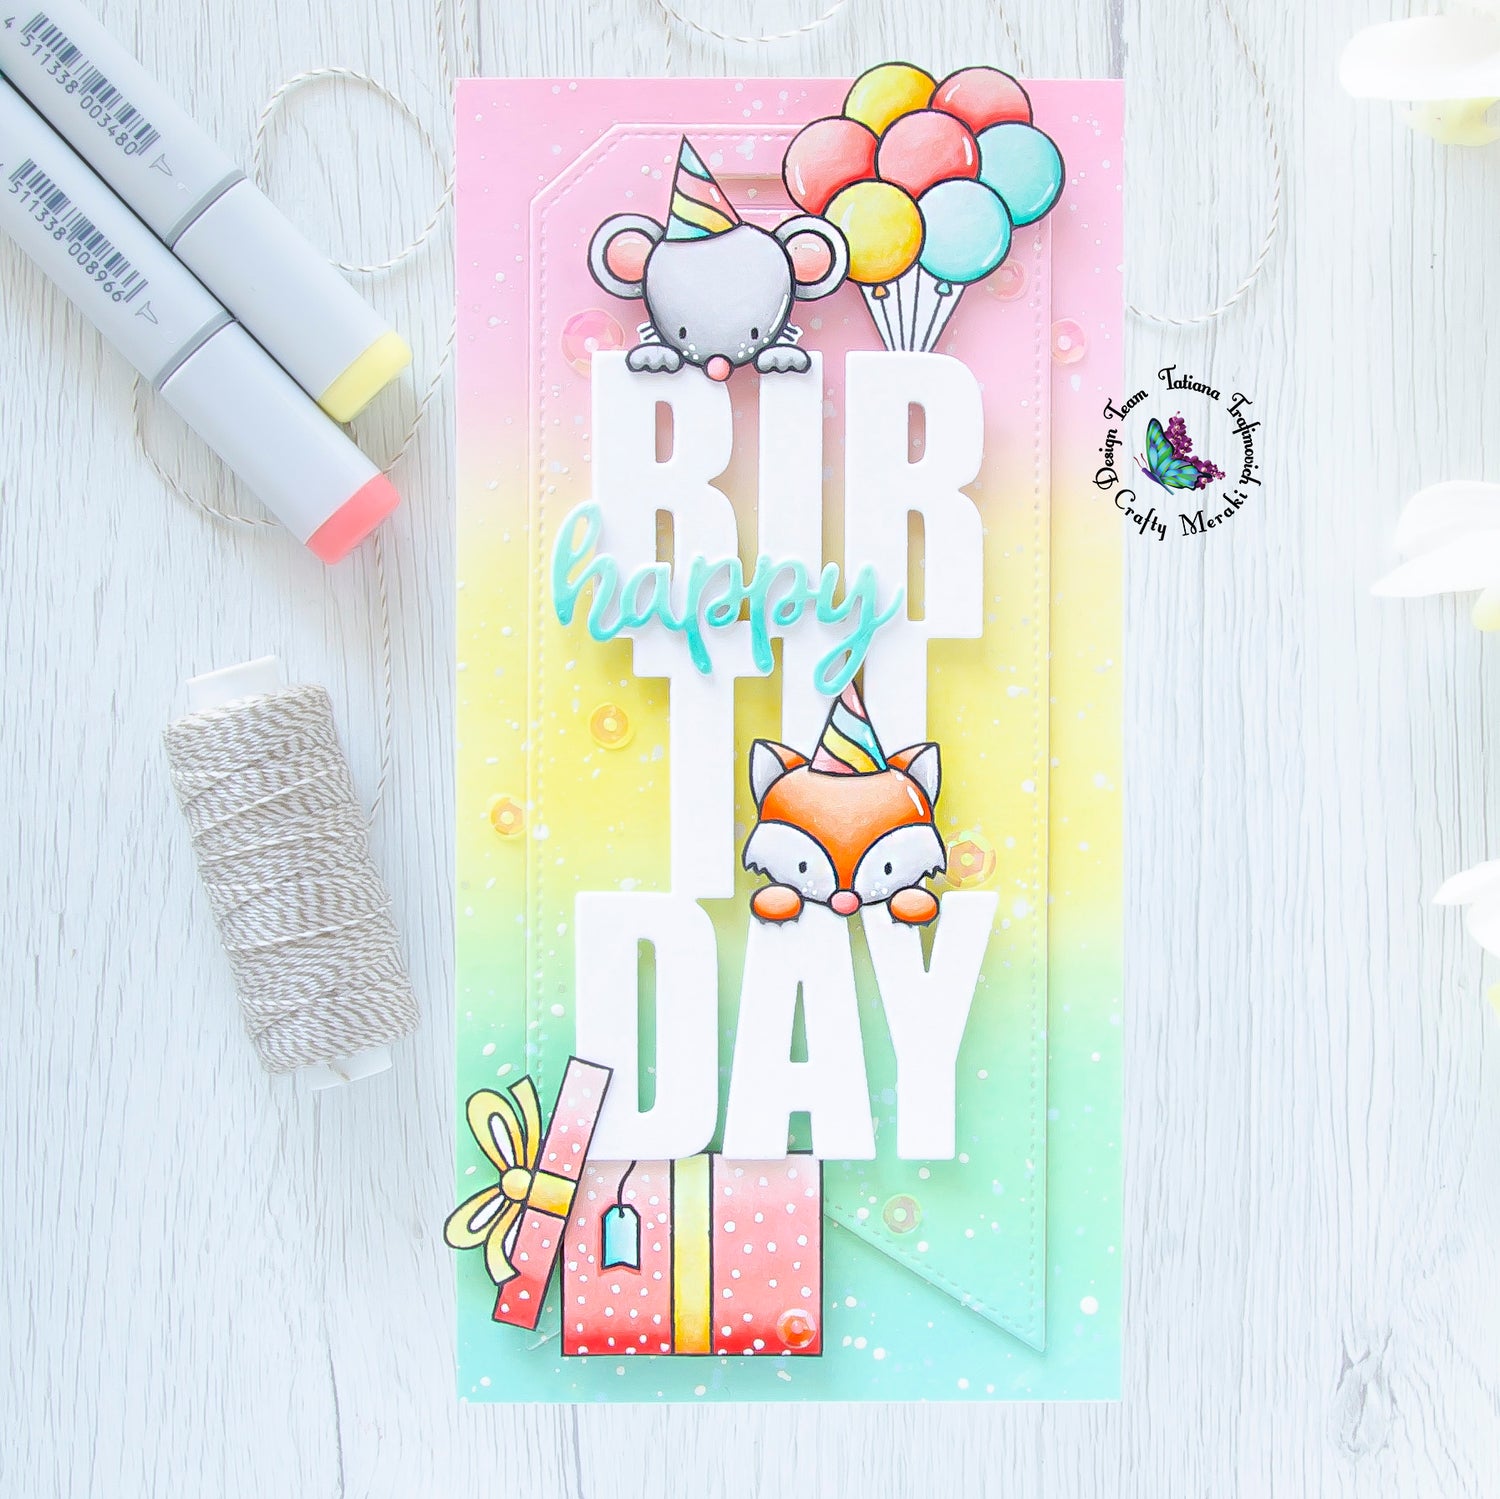 Cute birthday slimline card by Tatiana